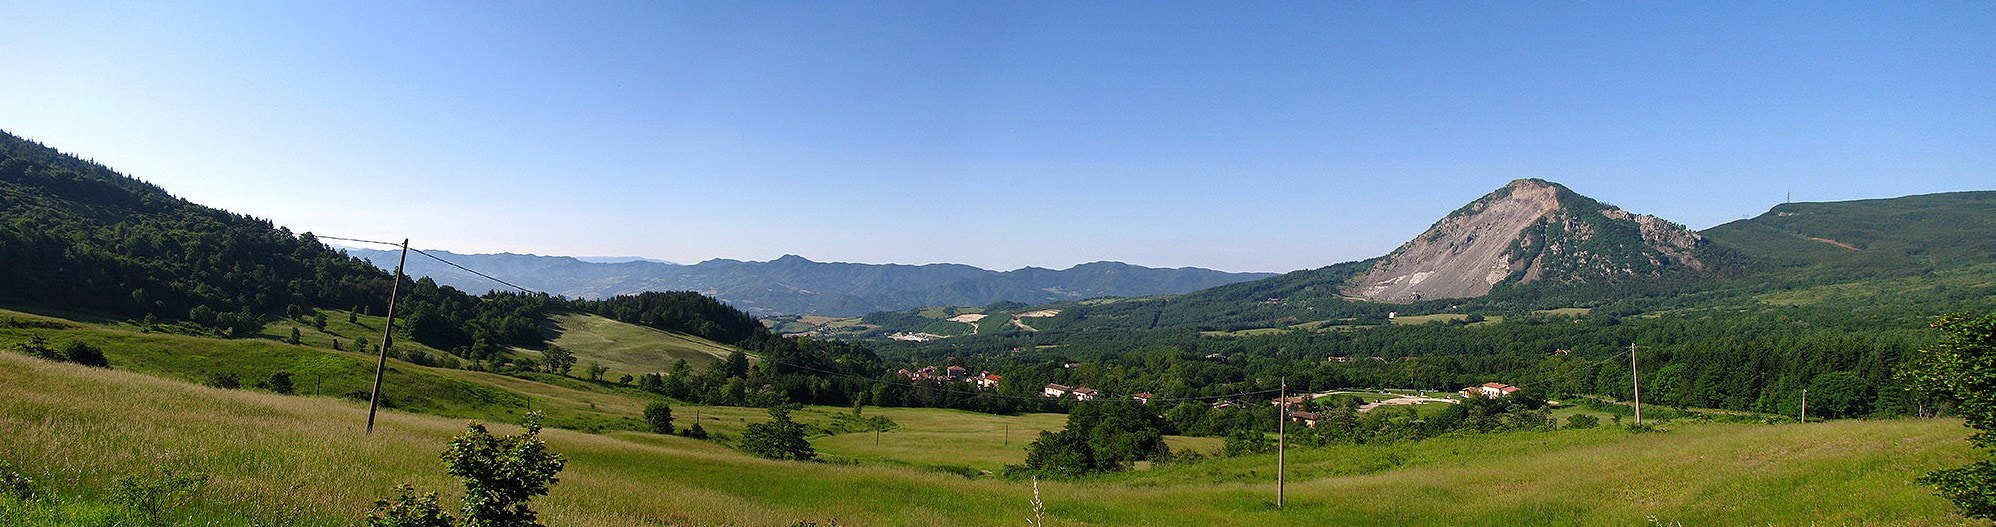 Panoramic view of Italian countryside